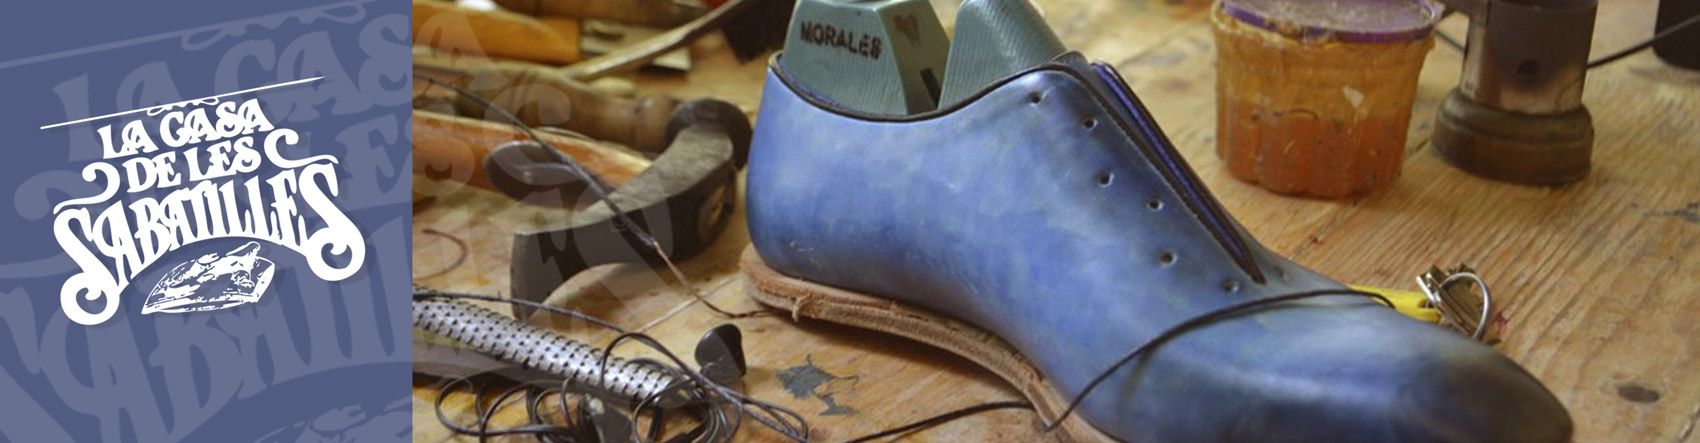 La casa de las zapatillas - Venta de zapatillas Nordikas, Calzados Montané, Calzados Festival, zapatillas esparto, hechas a mano en España. Outlet